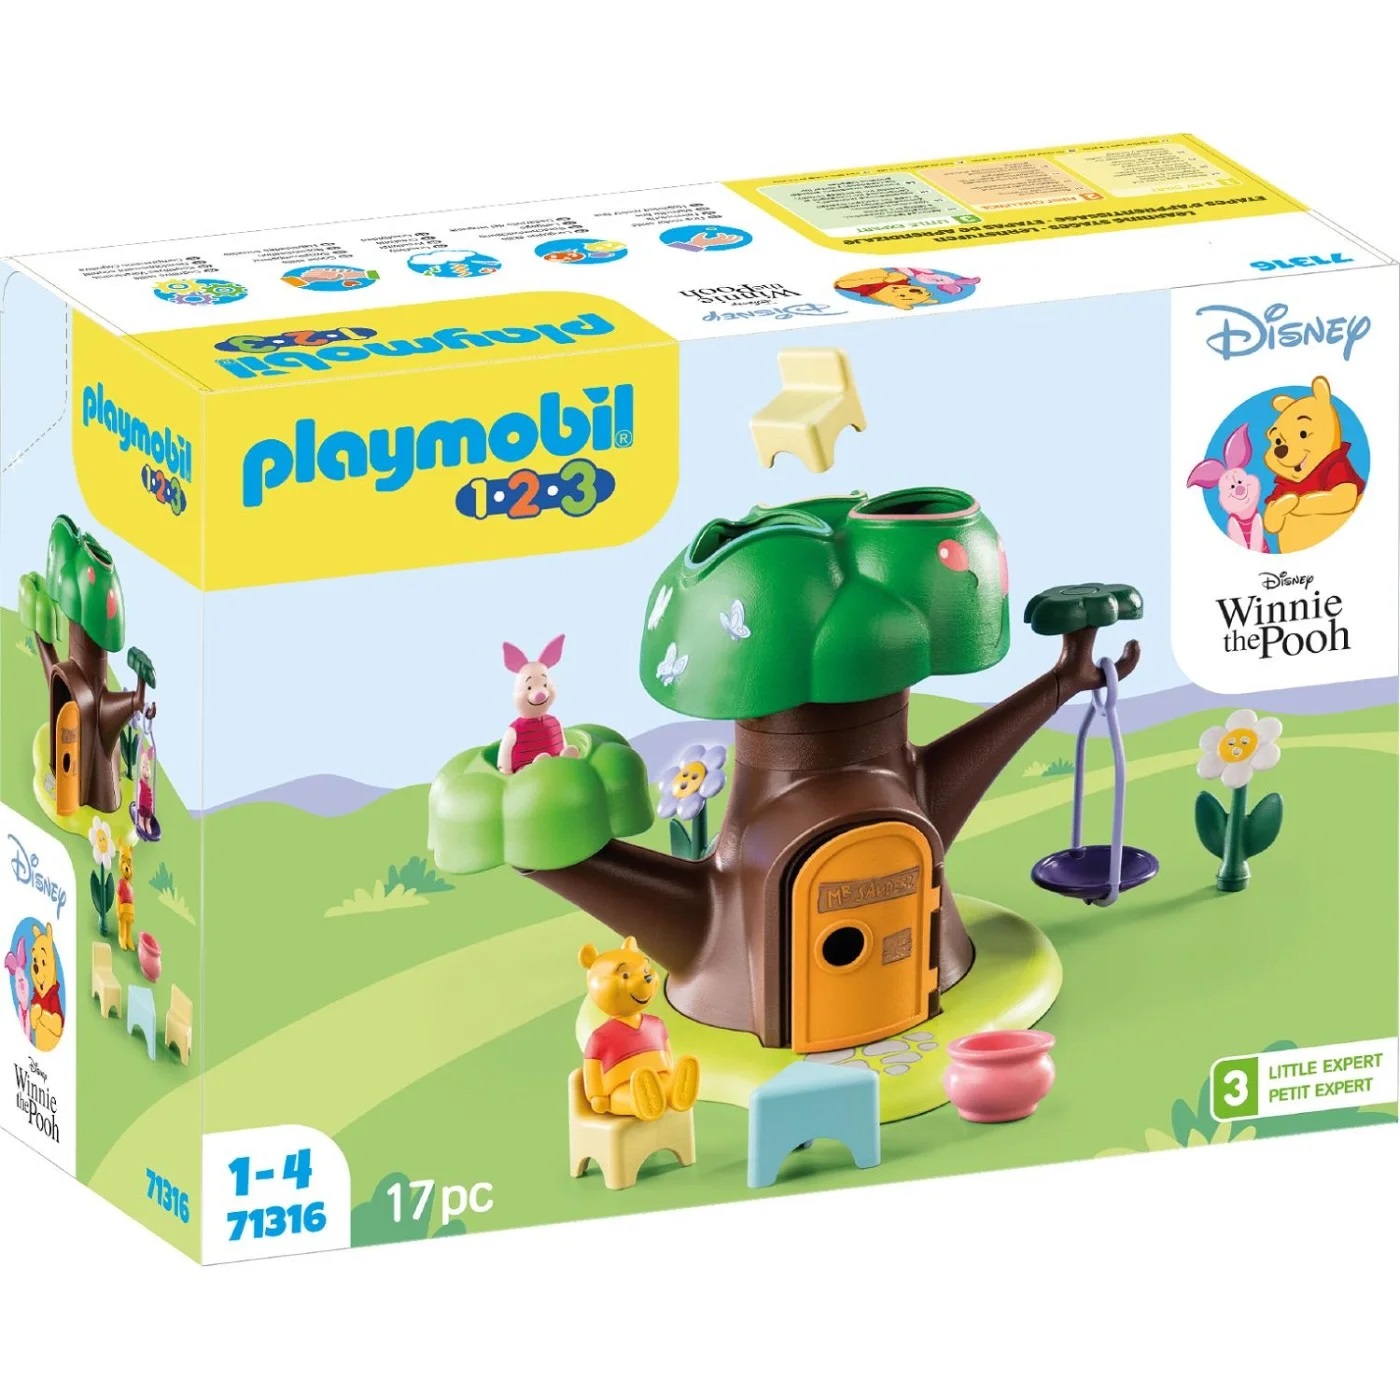 Casa din copac a lui Winnie si Piglet 1.2.3 Disney, Playmobil